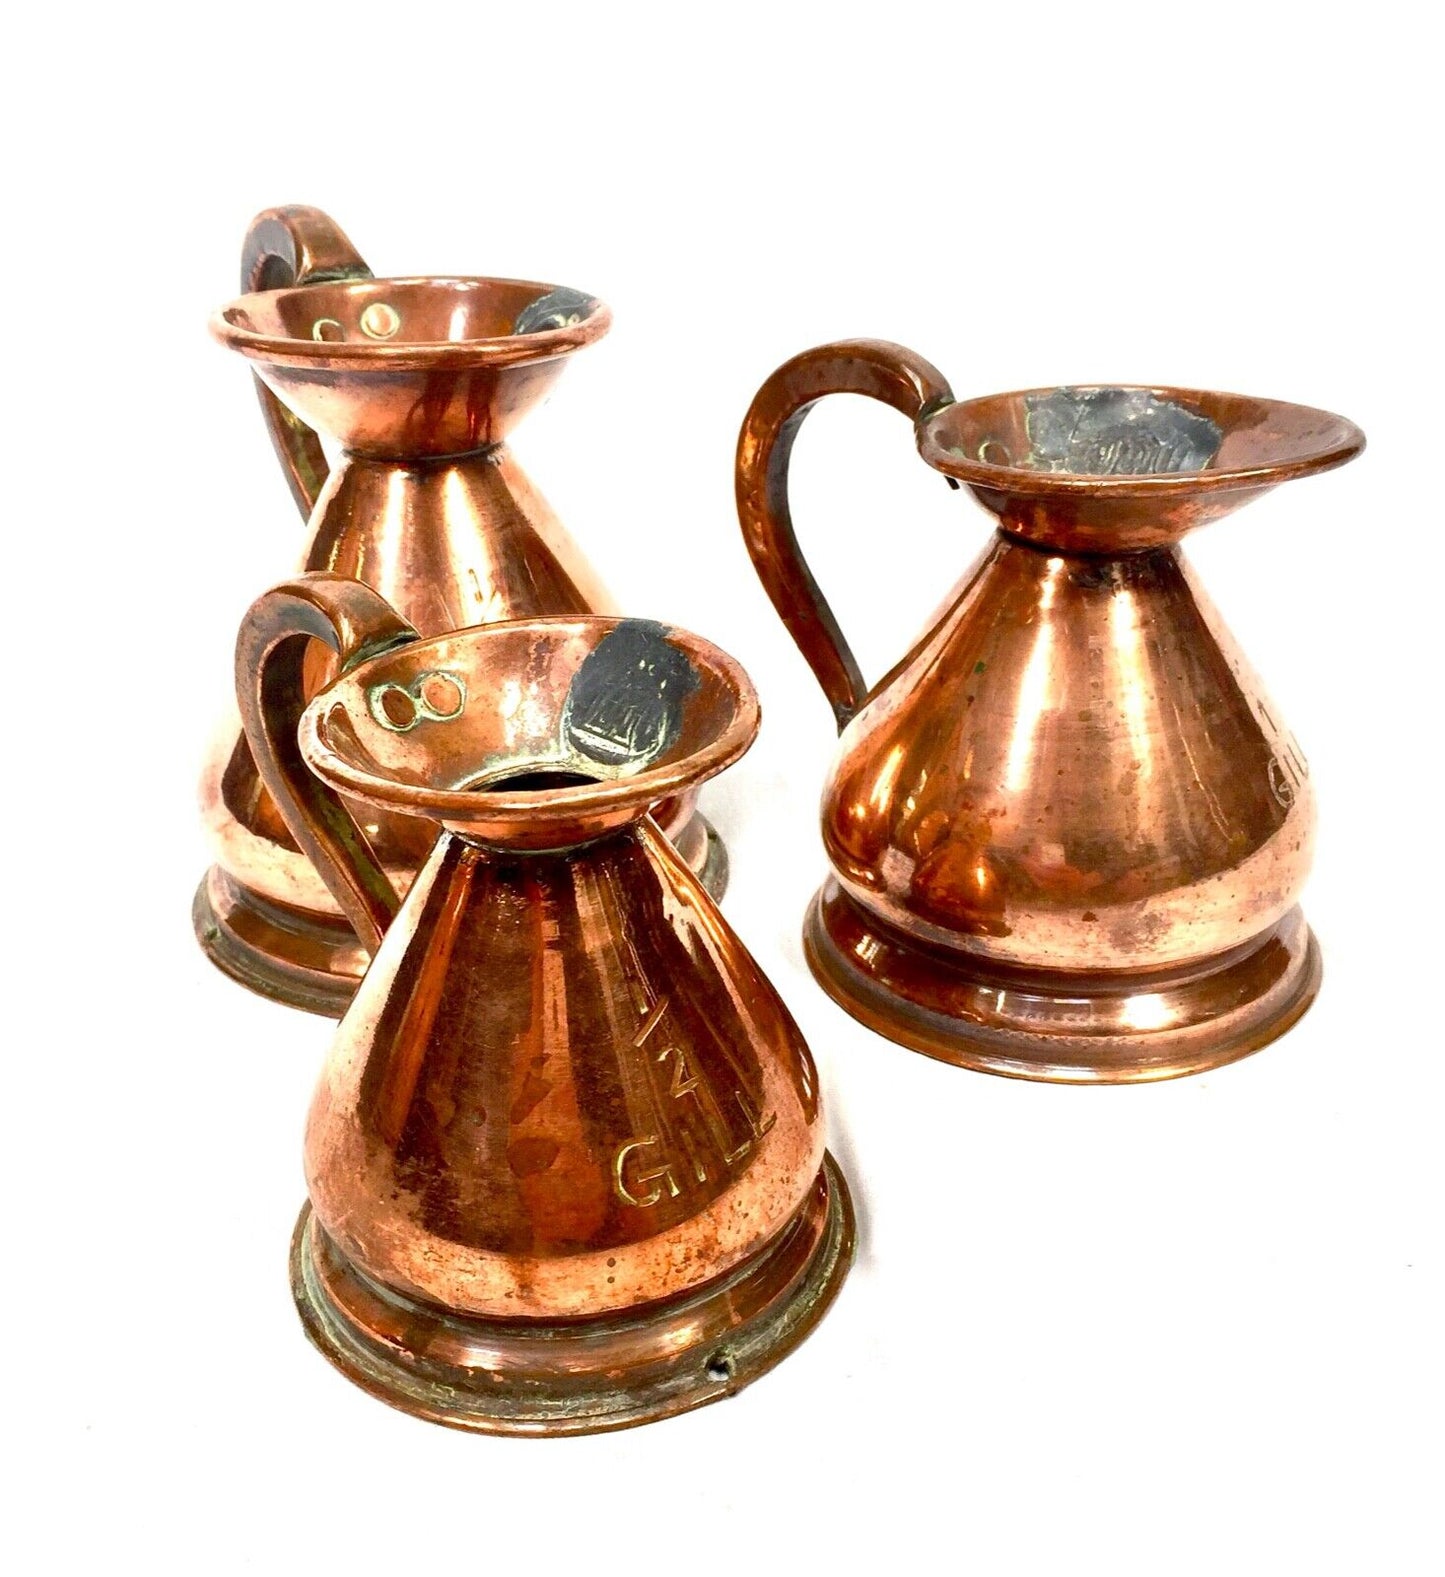 Antique Copper Jug Set / Measures / Handled Pouring Jugs / Country Kitchen